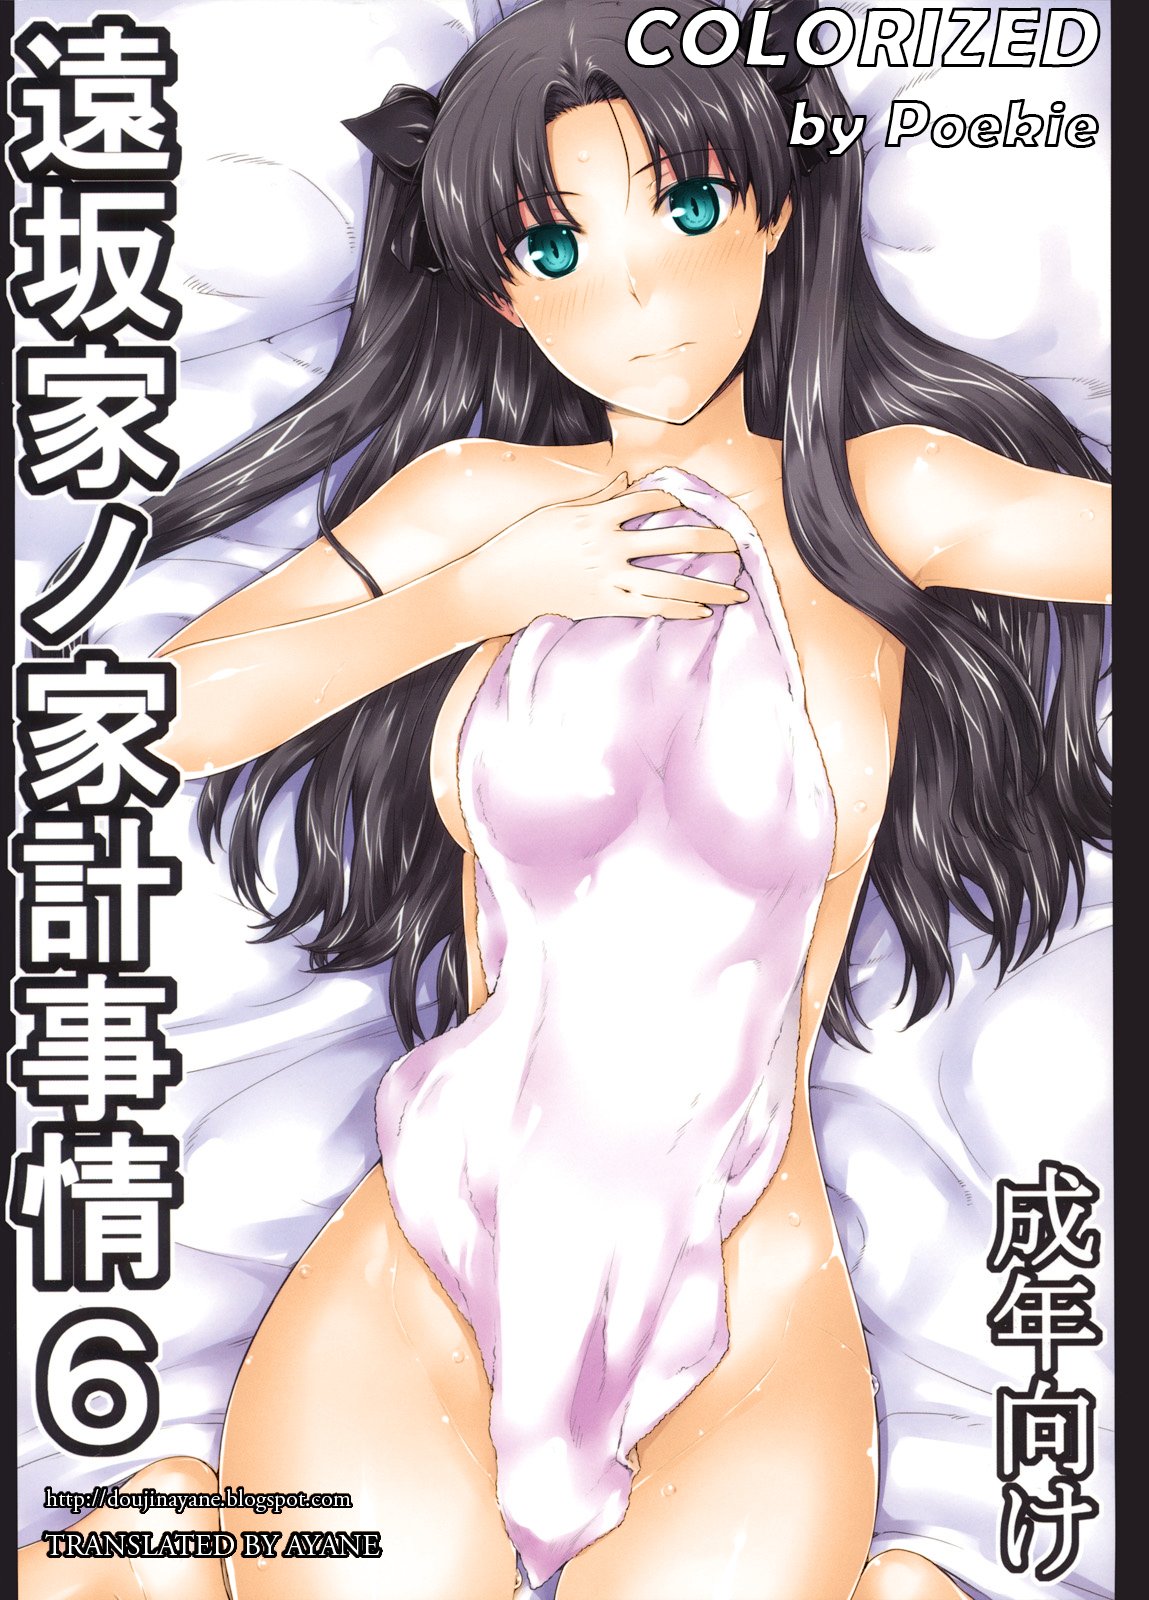 Kakei Sex - Tohsaka-ke no Kakei Jijou 6 [Colorized] comic porn | HD Porn Comics